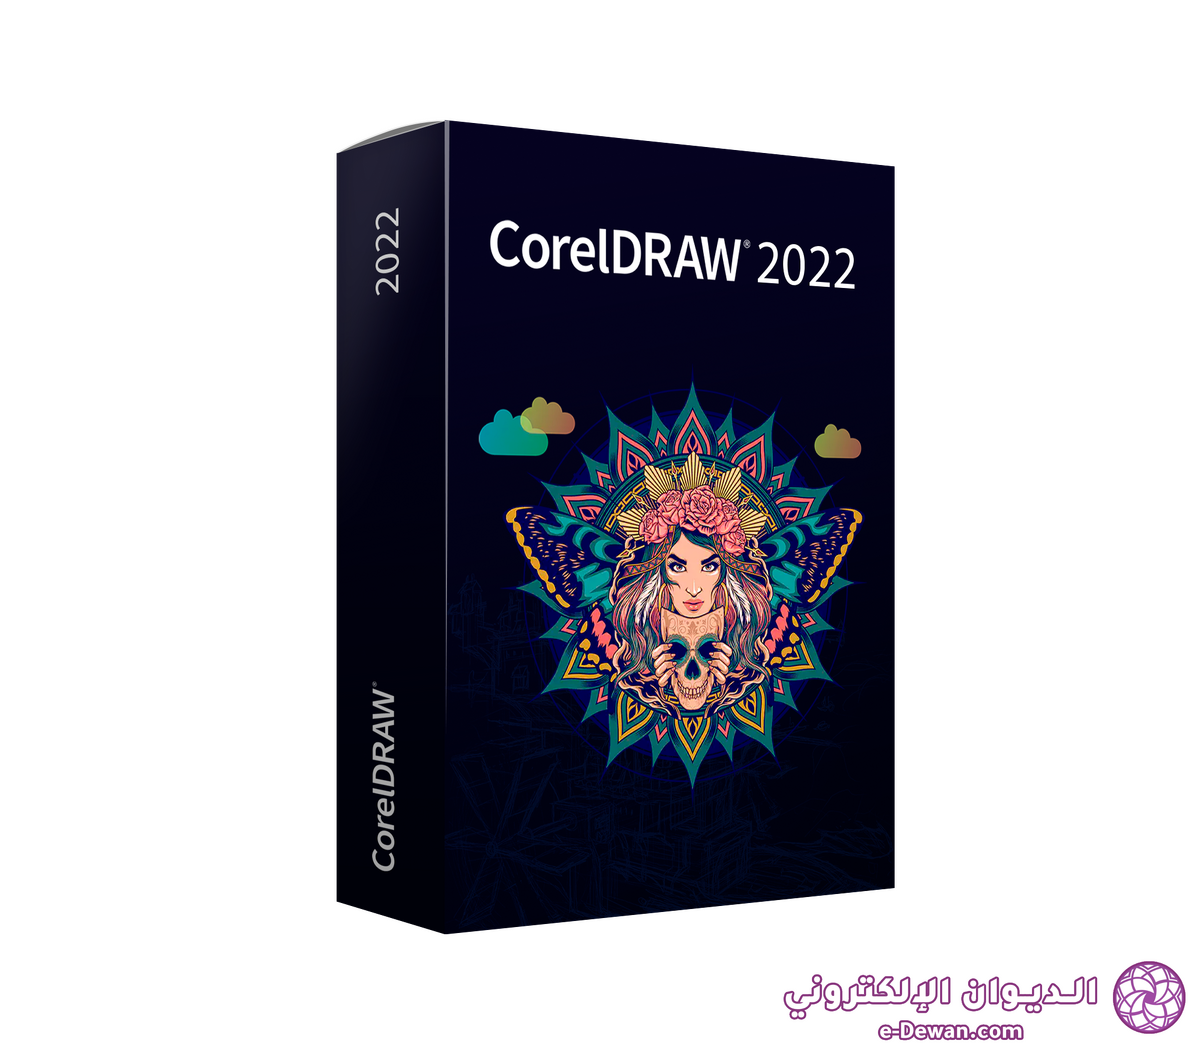 CD 2022